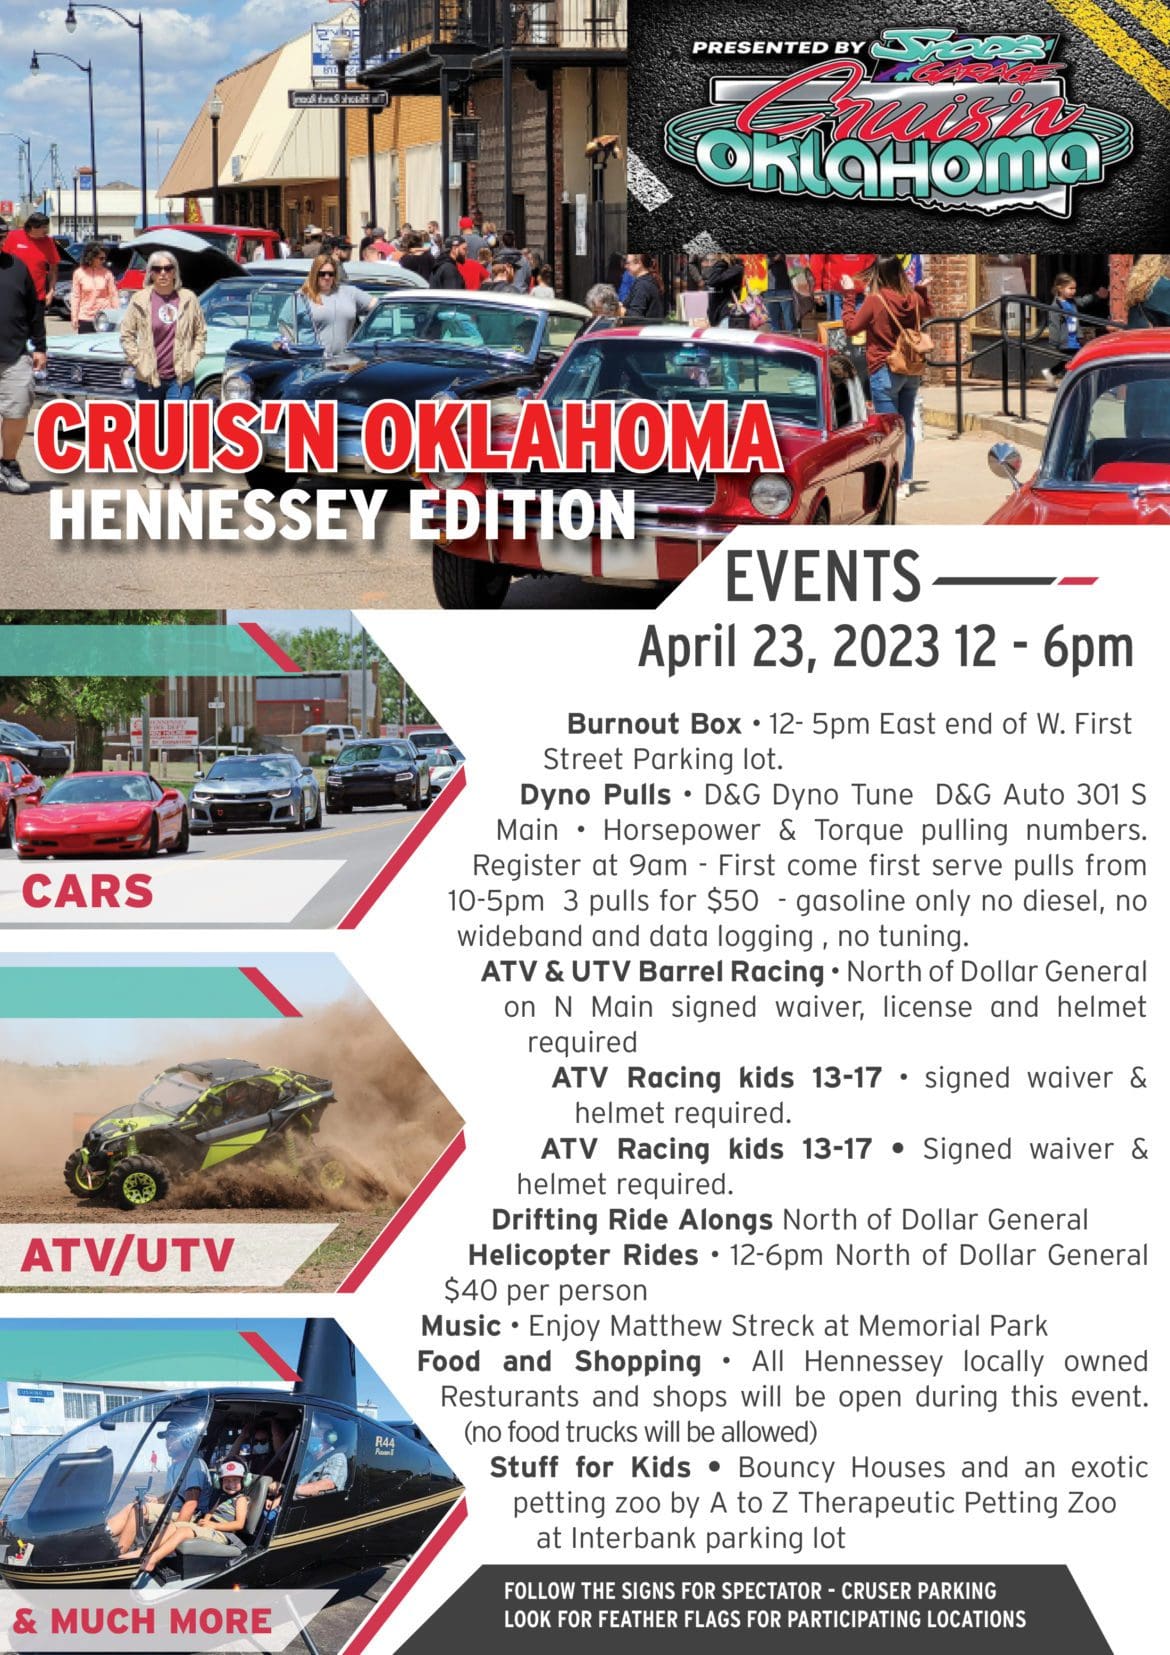 Cruisn’ Oklahoma Hennessey Edition 2023 April 23